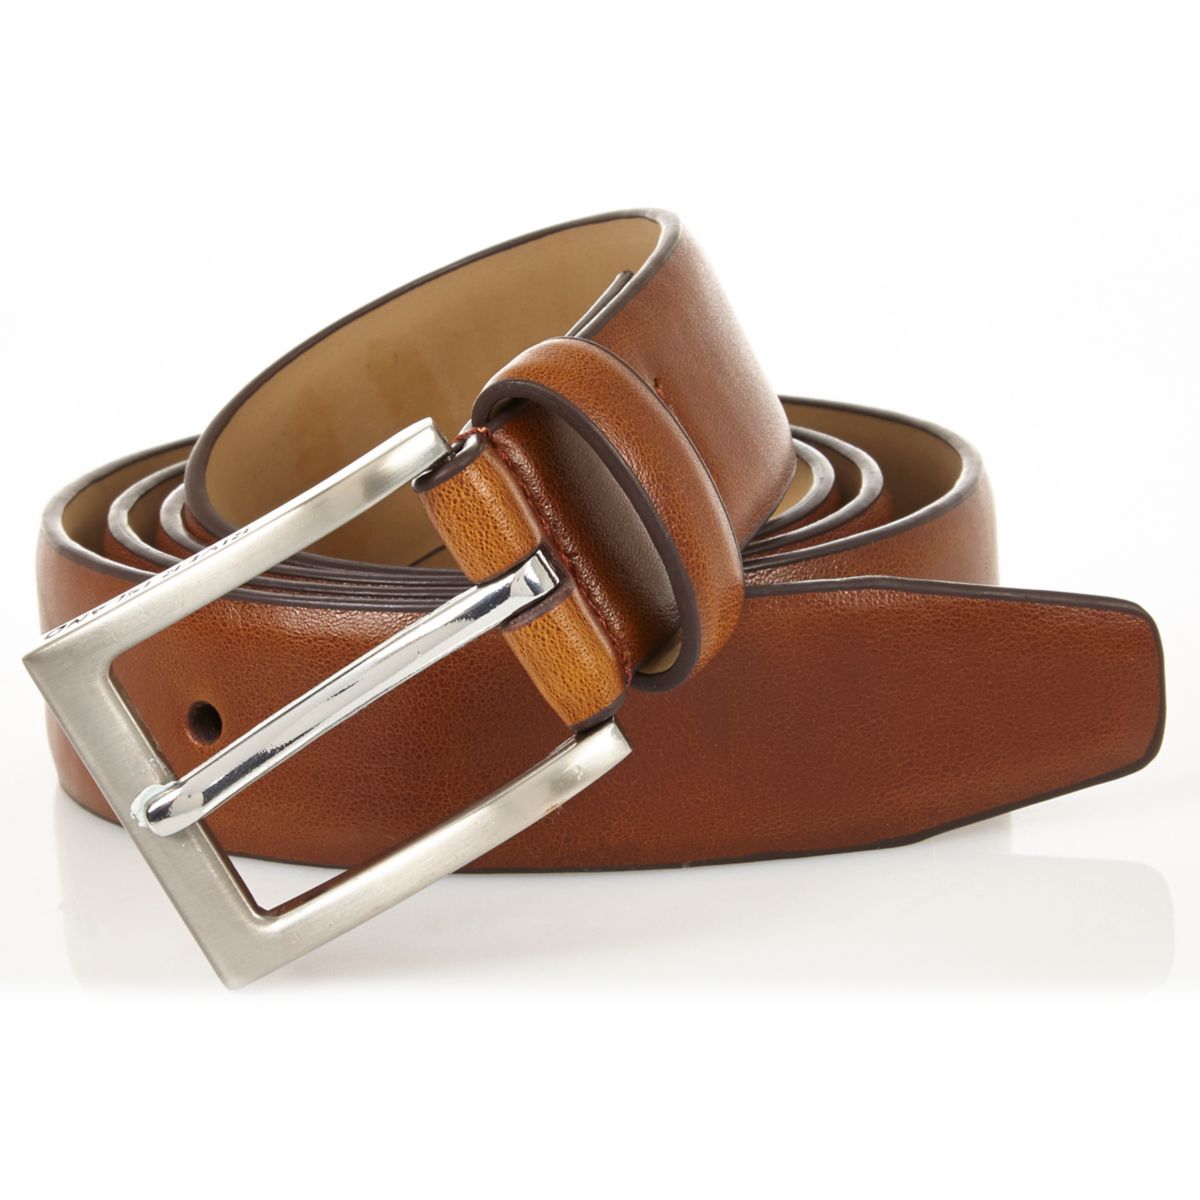 Light brown square buckle belt - Belts - Accessories - men